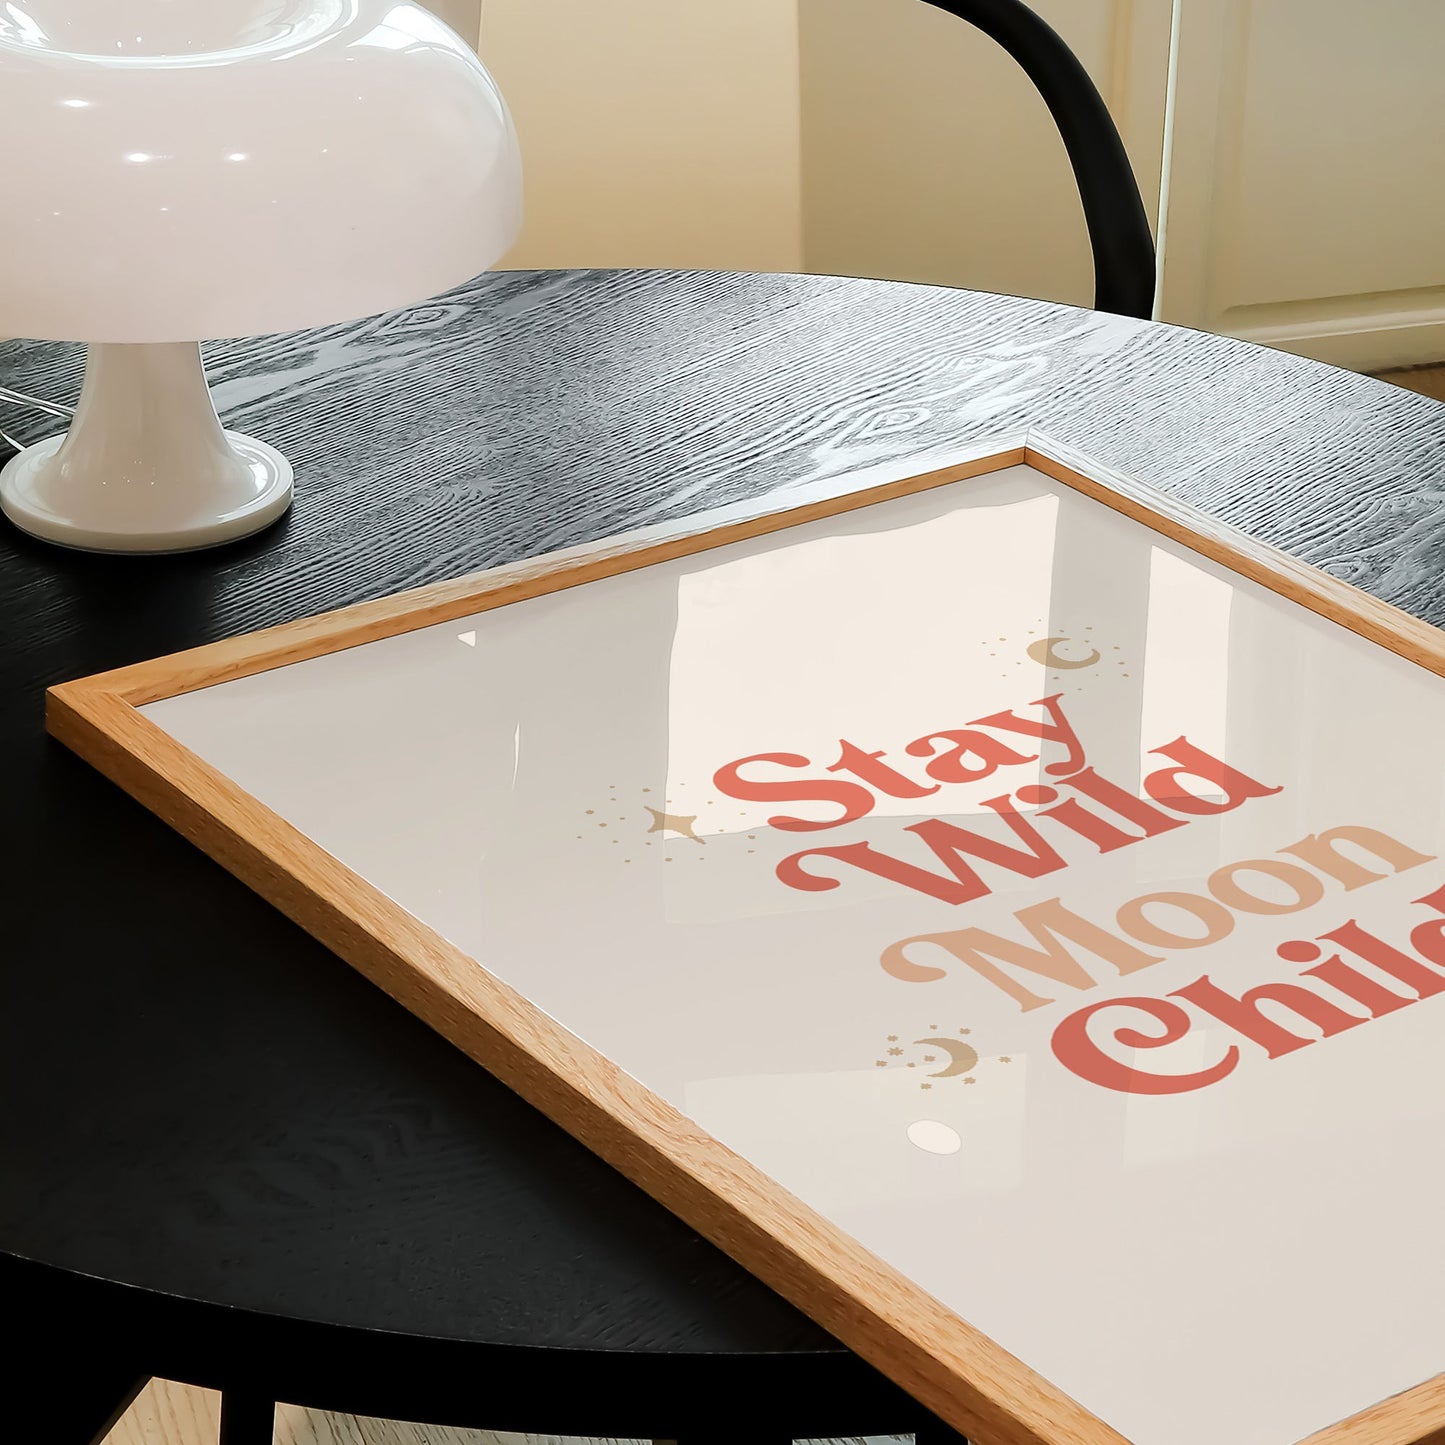 Stay Wild Moon Child Print